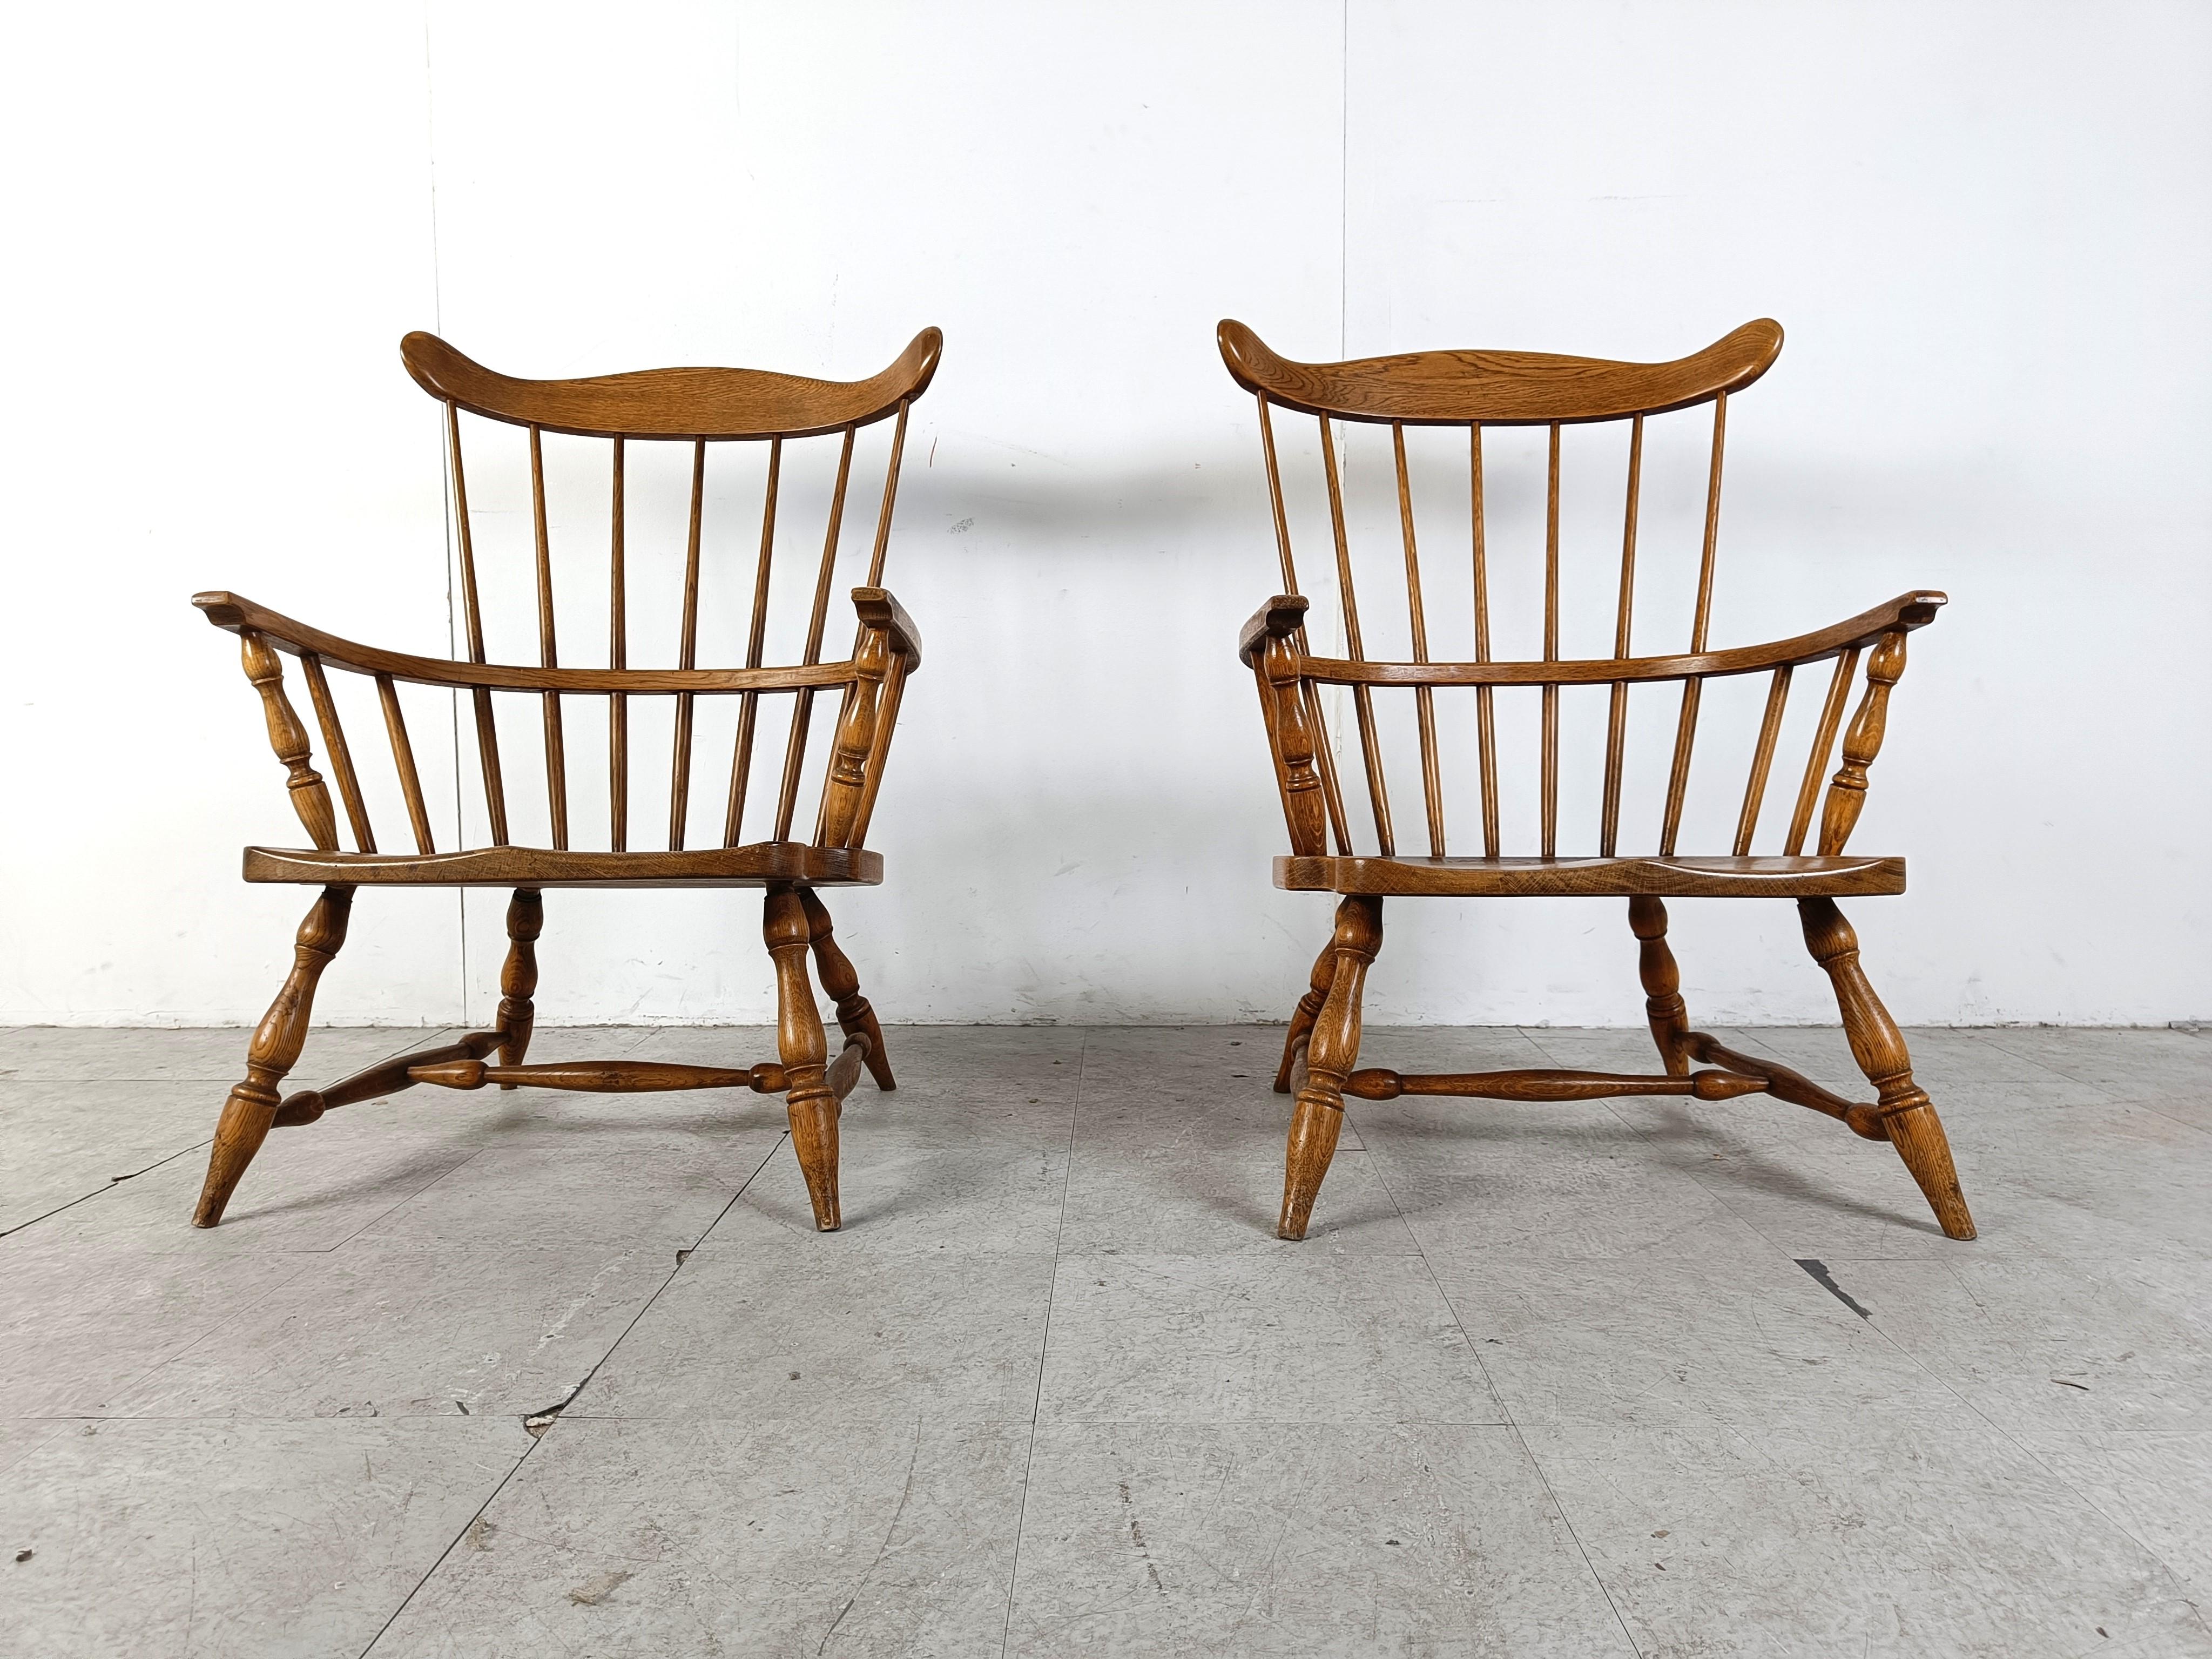 British 20th century English Windsor armchairs, set of 2